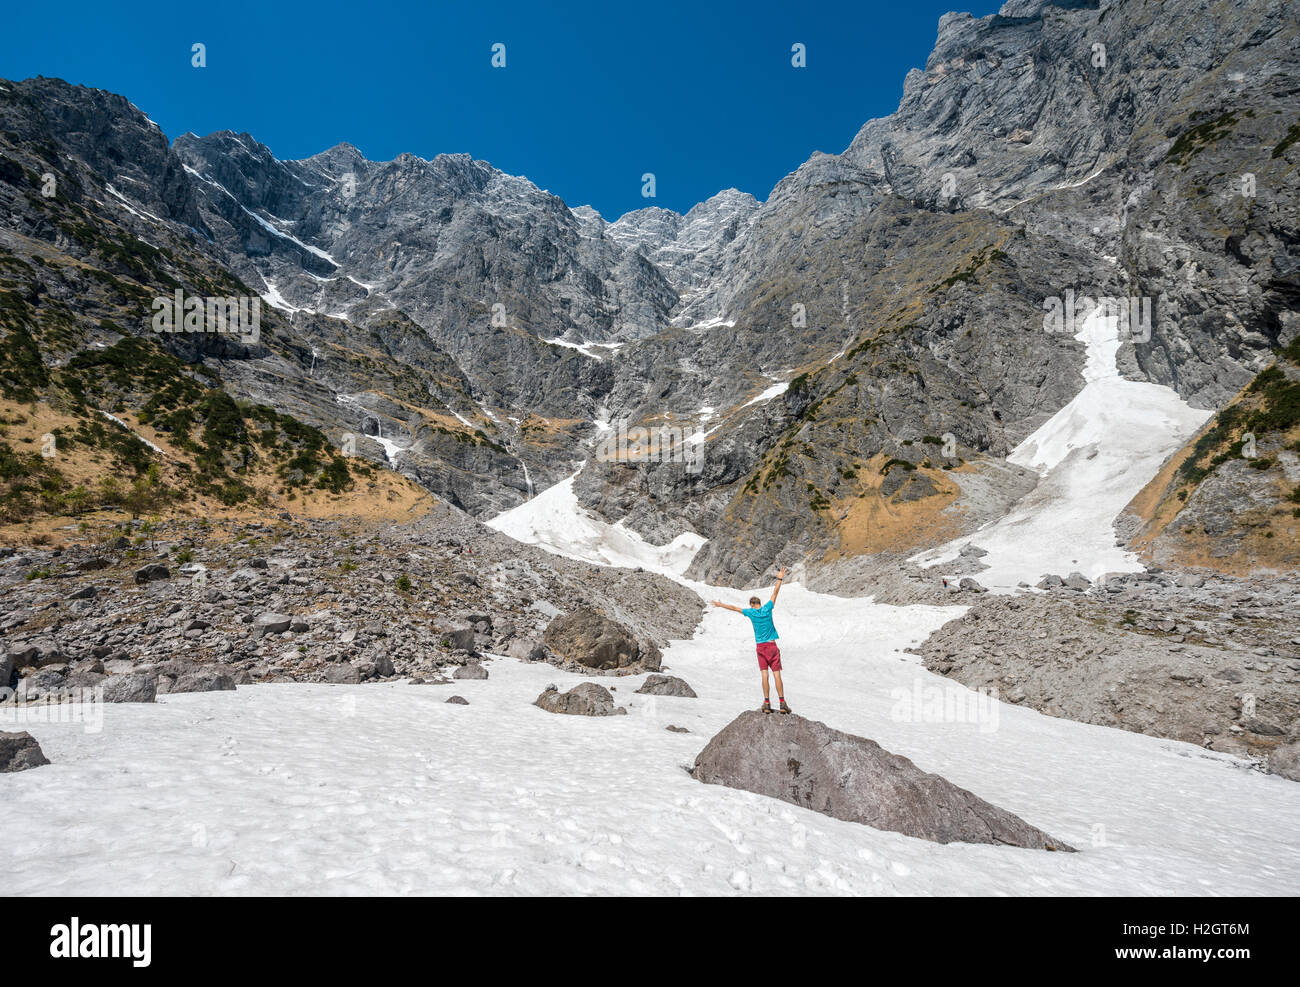 Young man on rock, snow field, Watzmann eastern slope, Berchtesgaden District, Upper Bavaria, Bavaria, Germany Stock Photo